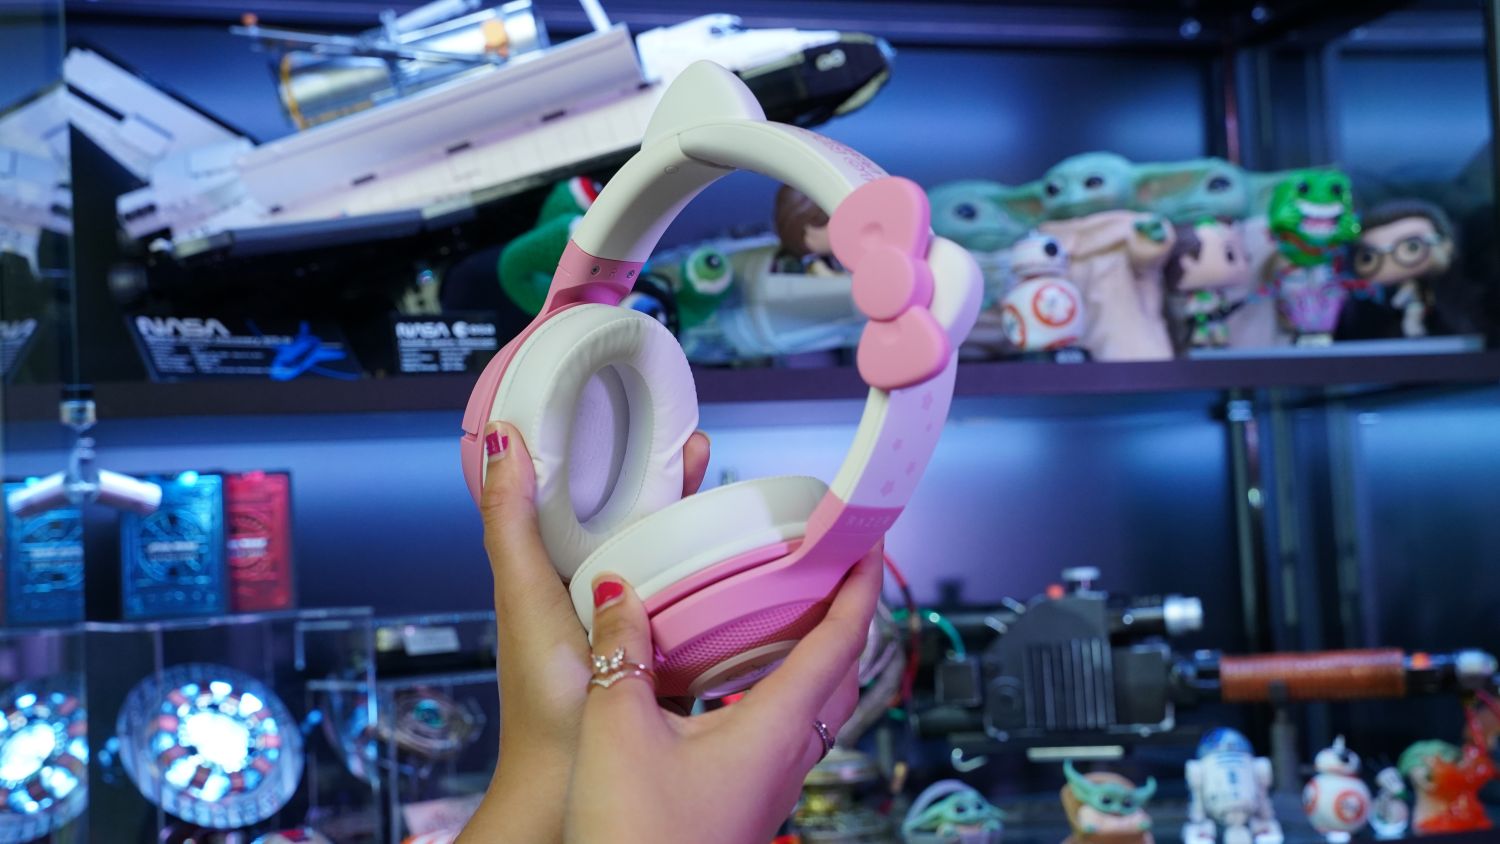 Sanrio Hello Kitty and Friends, Razer Gaming Gear